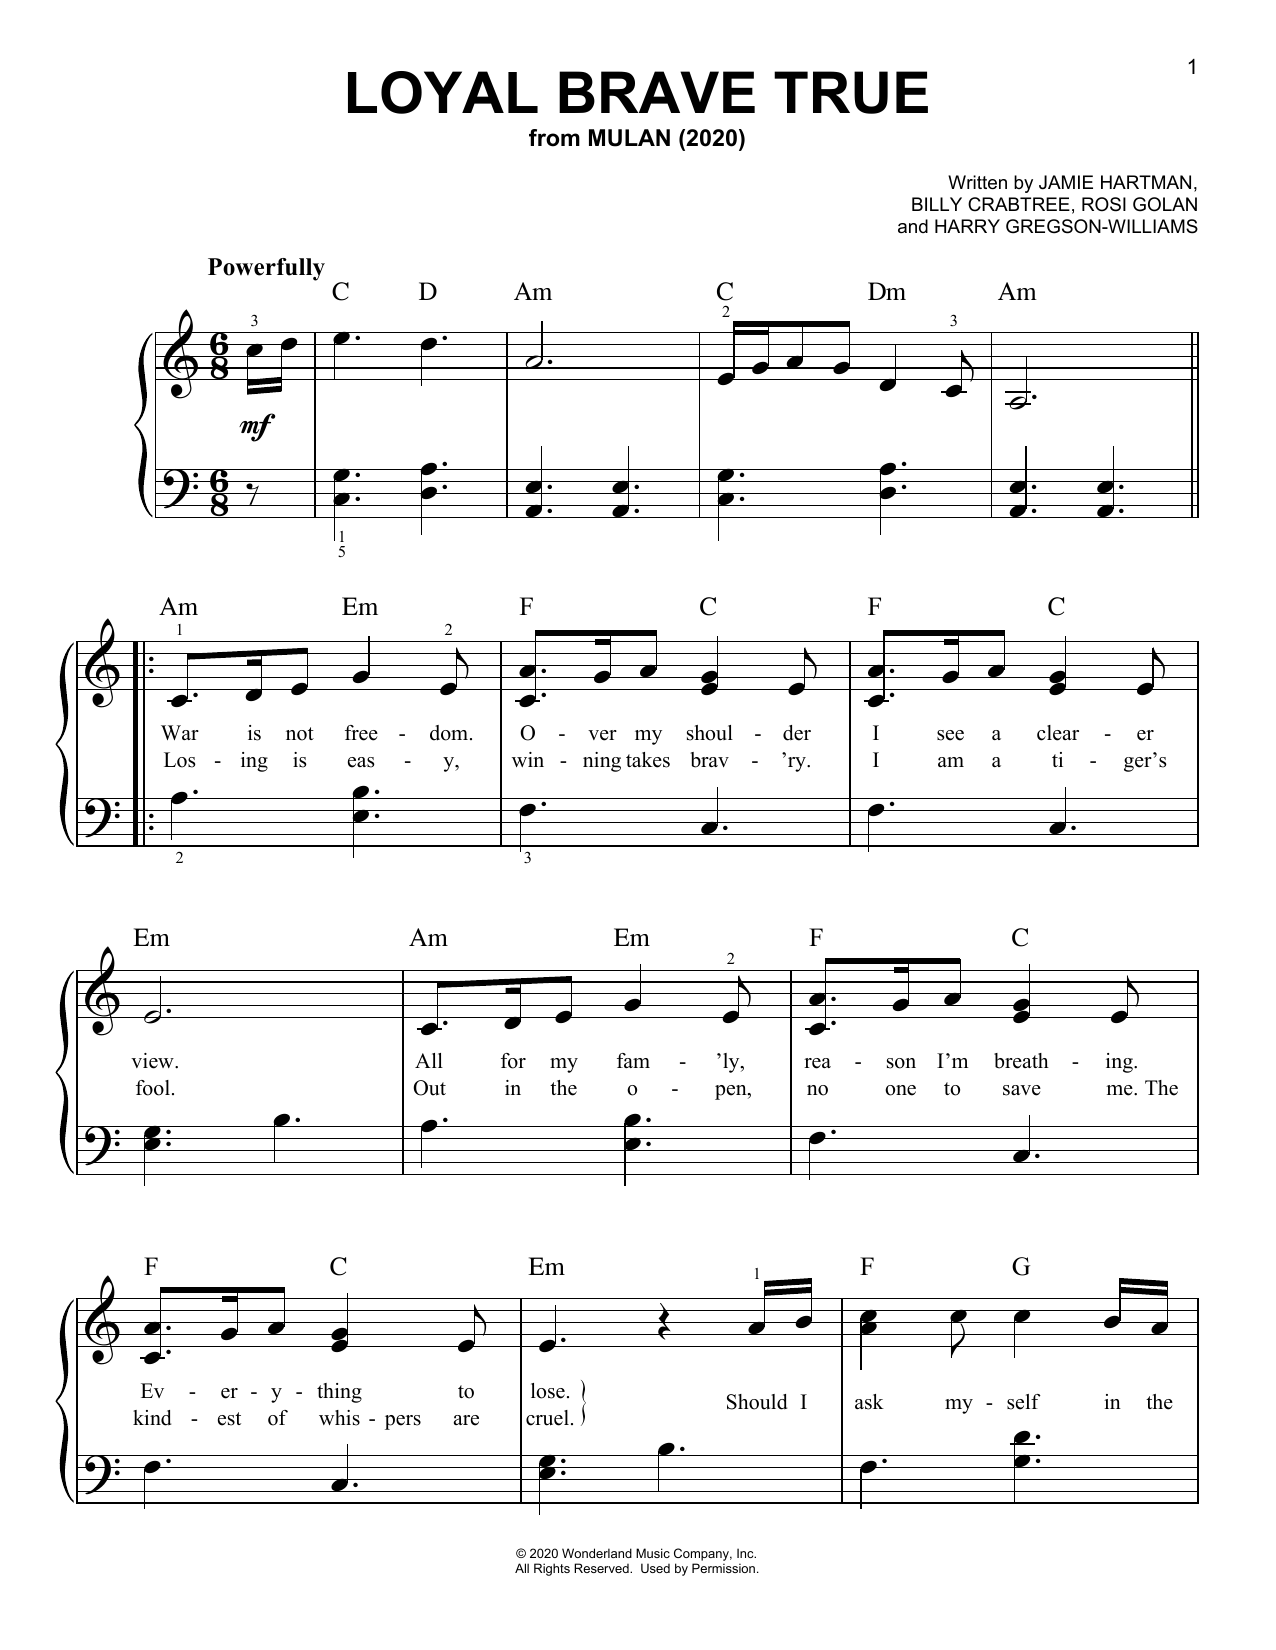 Christina Aguilera Loyal Brave True (from Mulan) Sheet Music Notes & Chords for 5-Finger Piano - Download or Print PDF